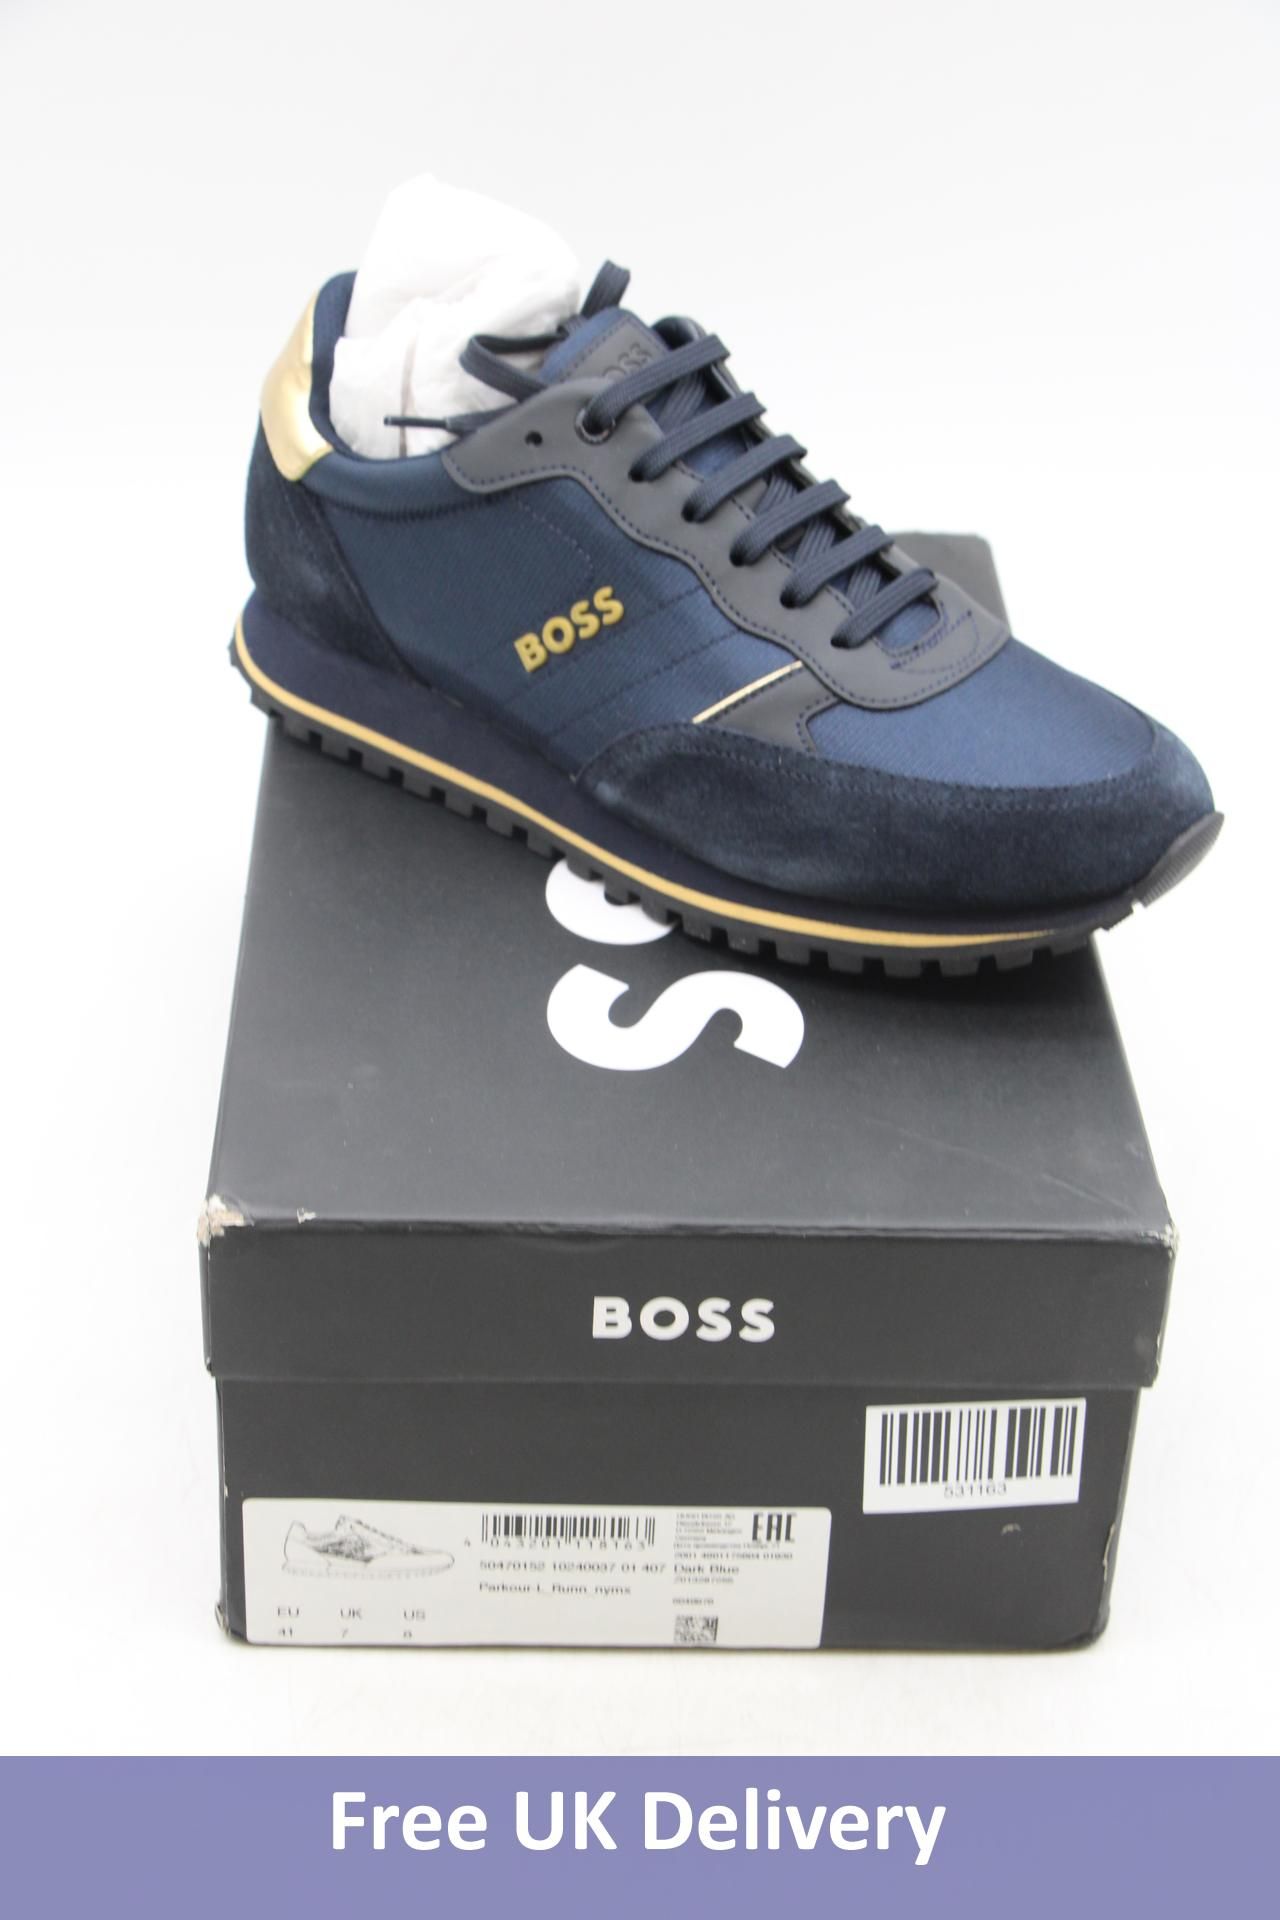 Hugo Boss Parkour Low Trainers, Dark Blue, UK 7. Box damaged